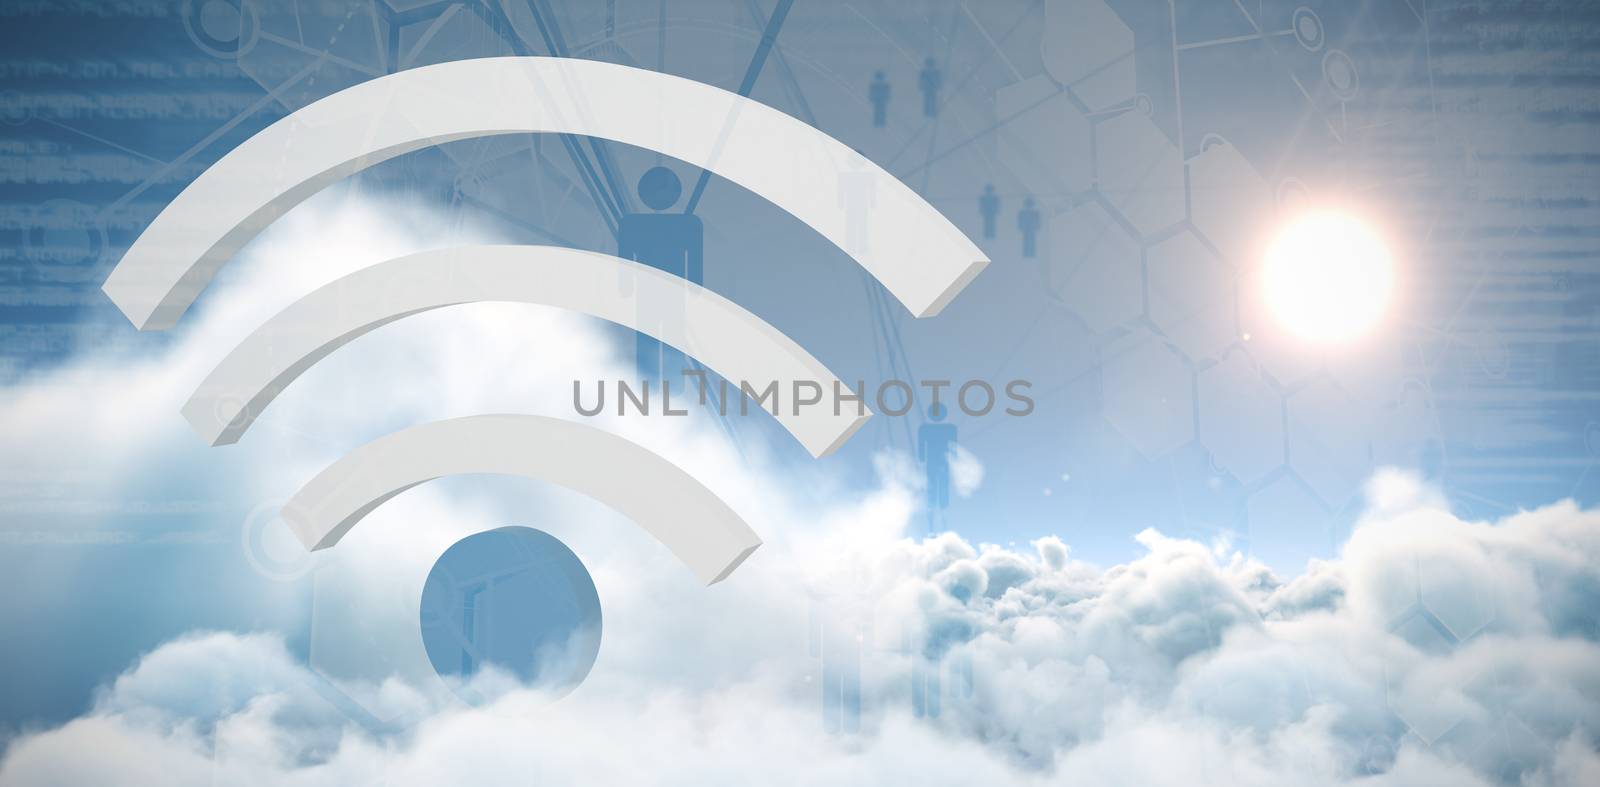 Composite image of wifi symbol by Wavebreakmedia